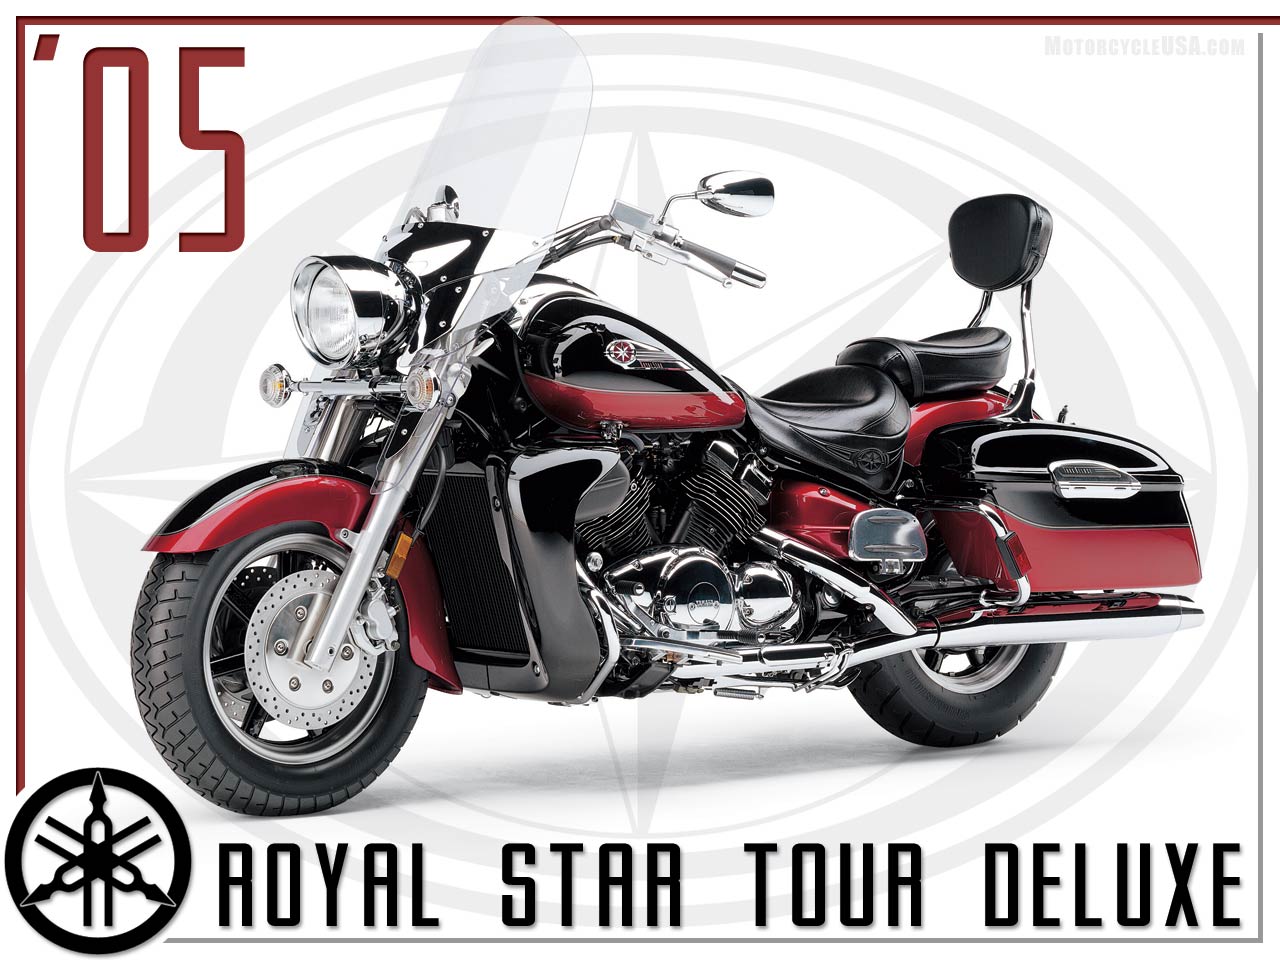 Yamaha Royal Star Tour Deluxe 2005 #7